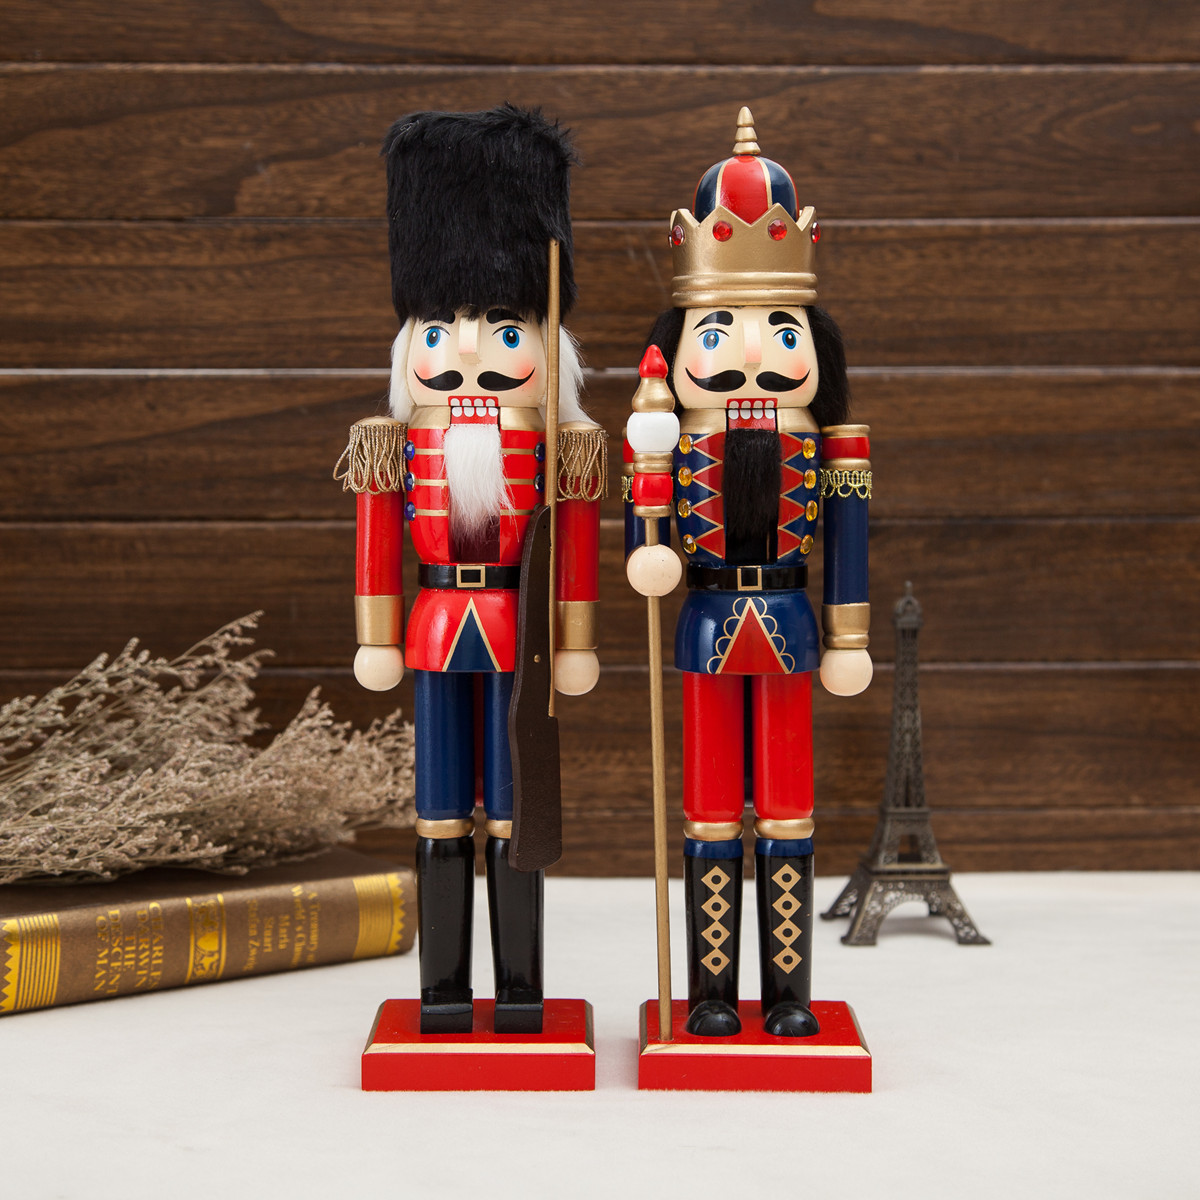 38cm-Wooden-Nutcracker-Doll-Soldier-Vintage-Handcraft-Decoration-Christmas-Gifts-1394894-3